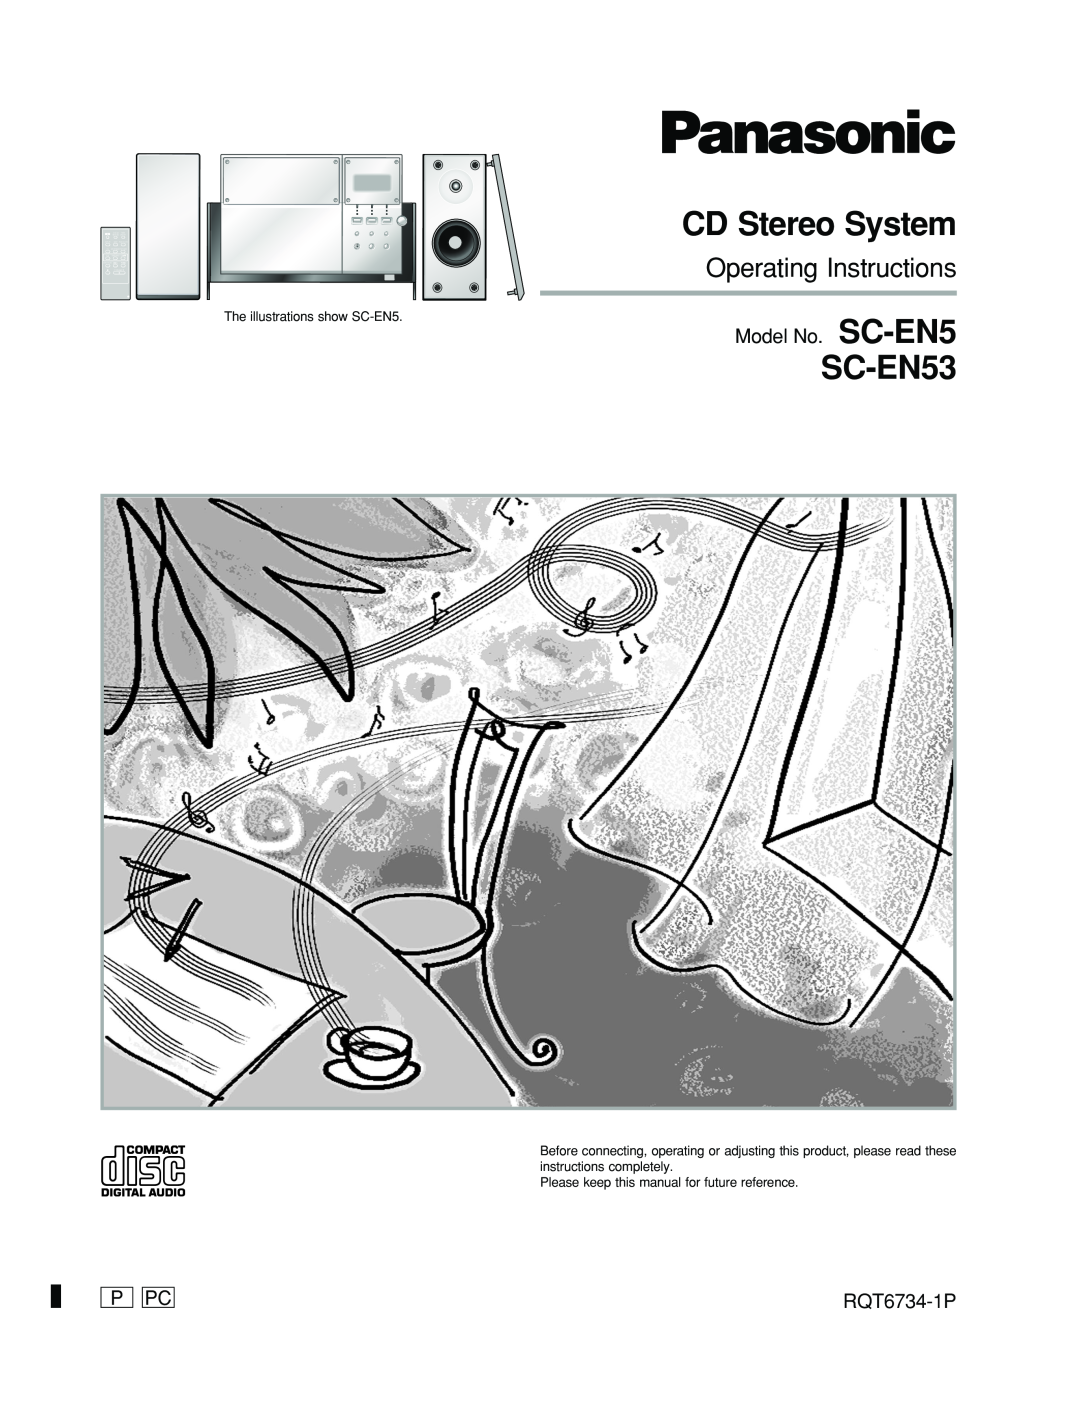 Panasonic manual Model No. SC-EN5, P Pc, RQT6734-1P, CD Stereo System, SC-EN53, Operating Instructions, Volume 